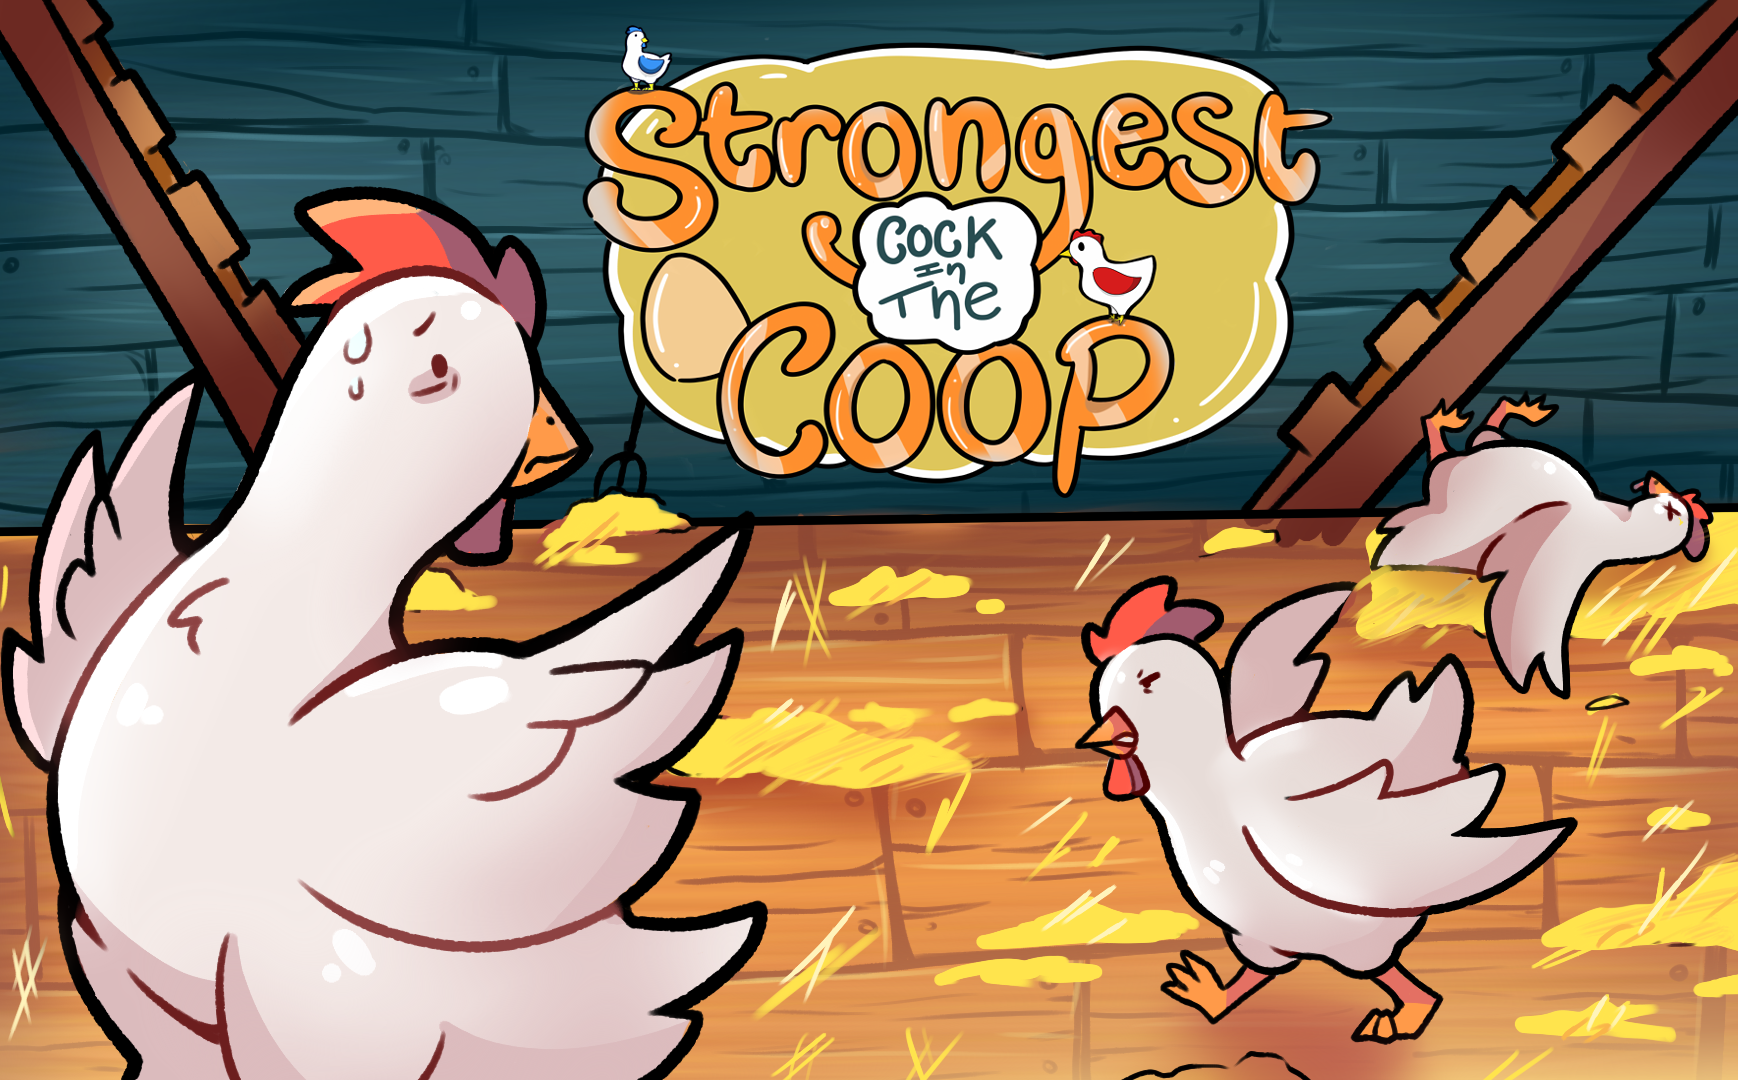 Strongest Cock in the Coop